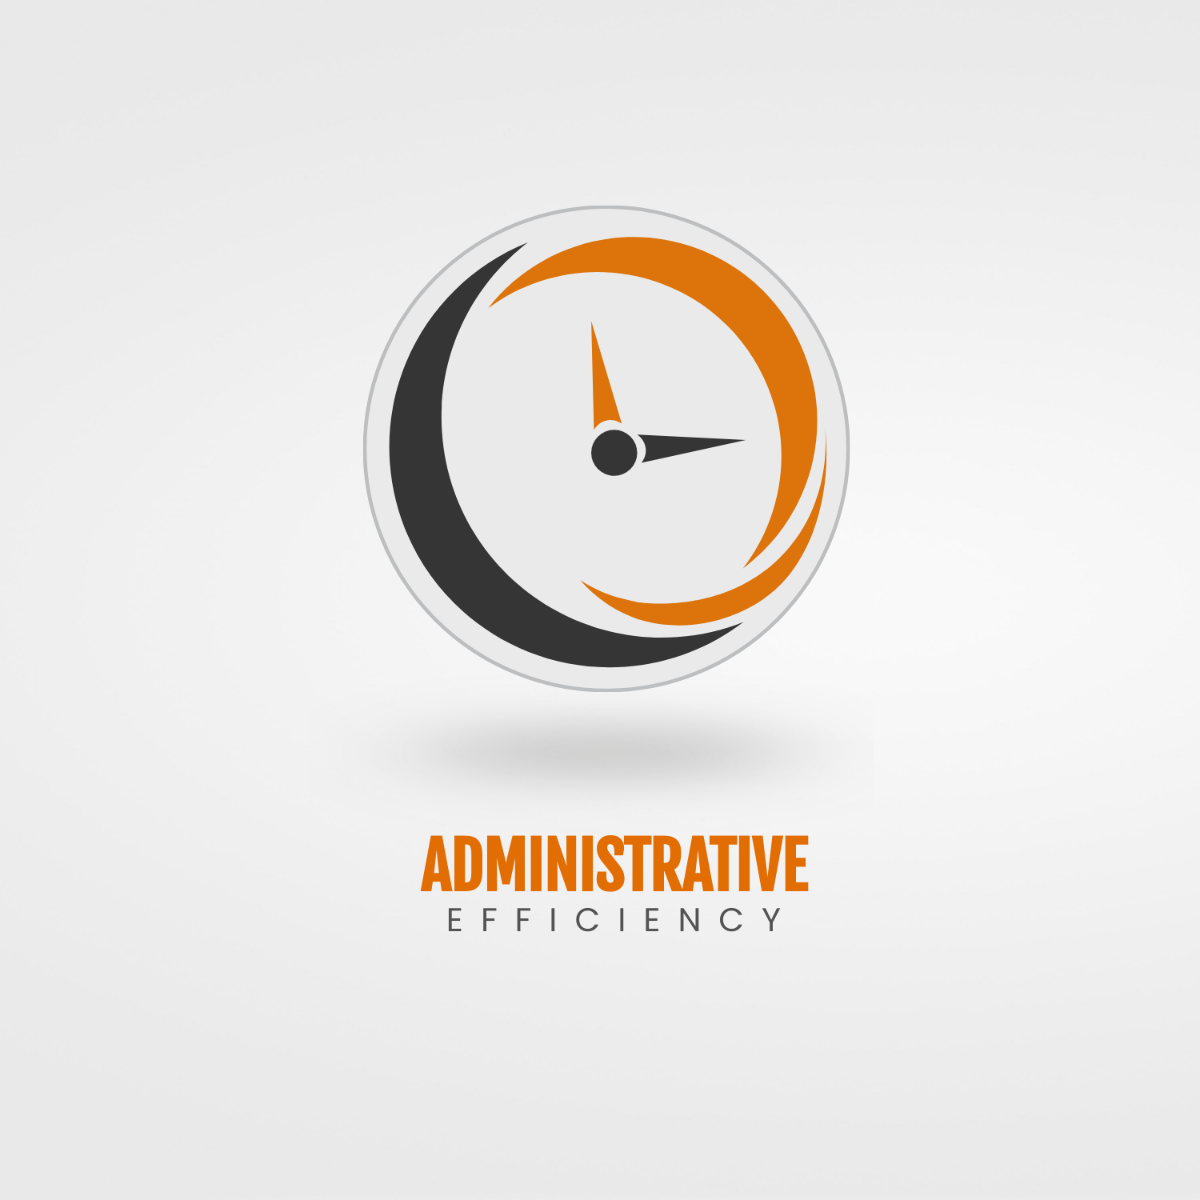 Administrative Efficiency Clock Logo Template